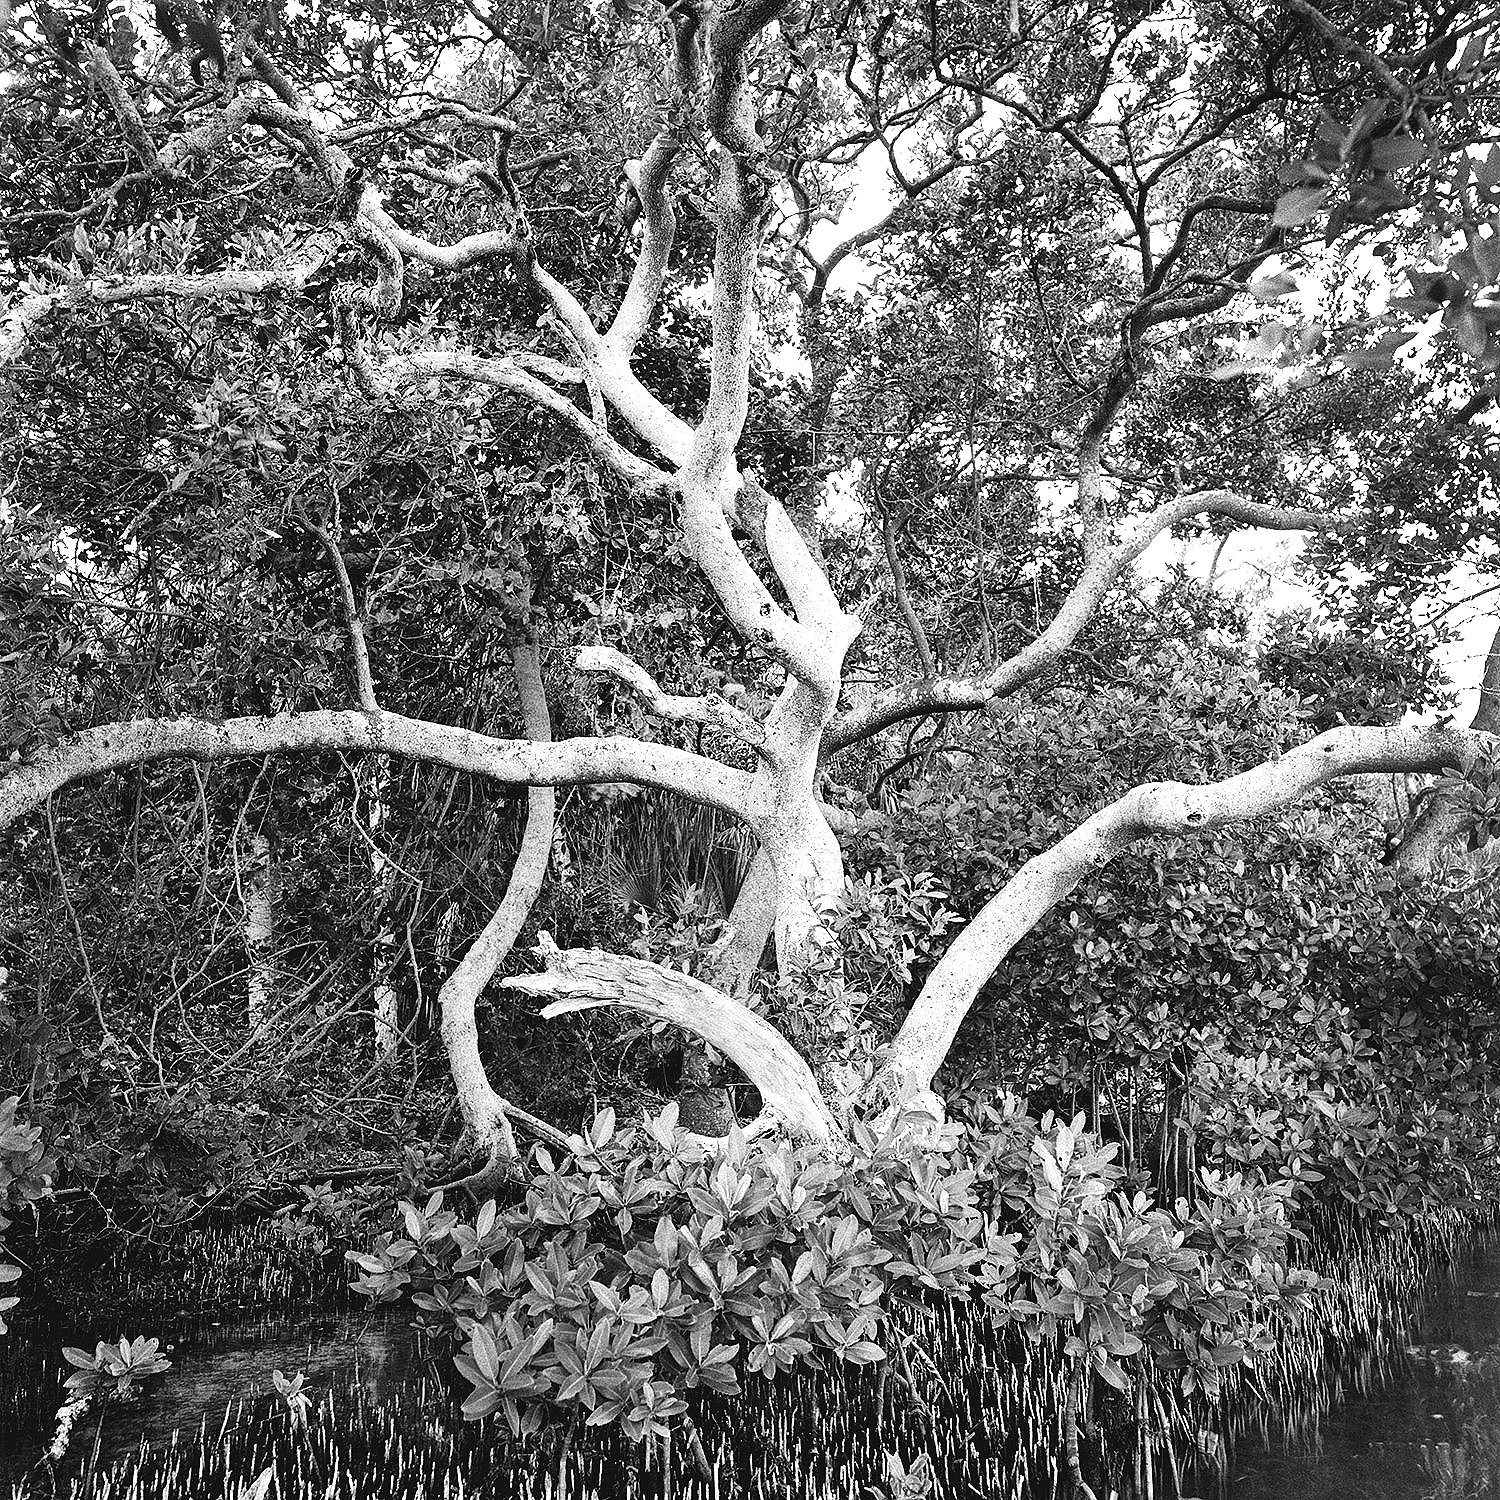 Large Mangrove Tree & Creek, Florida Keys